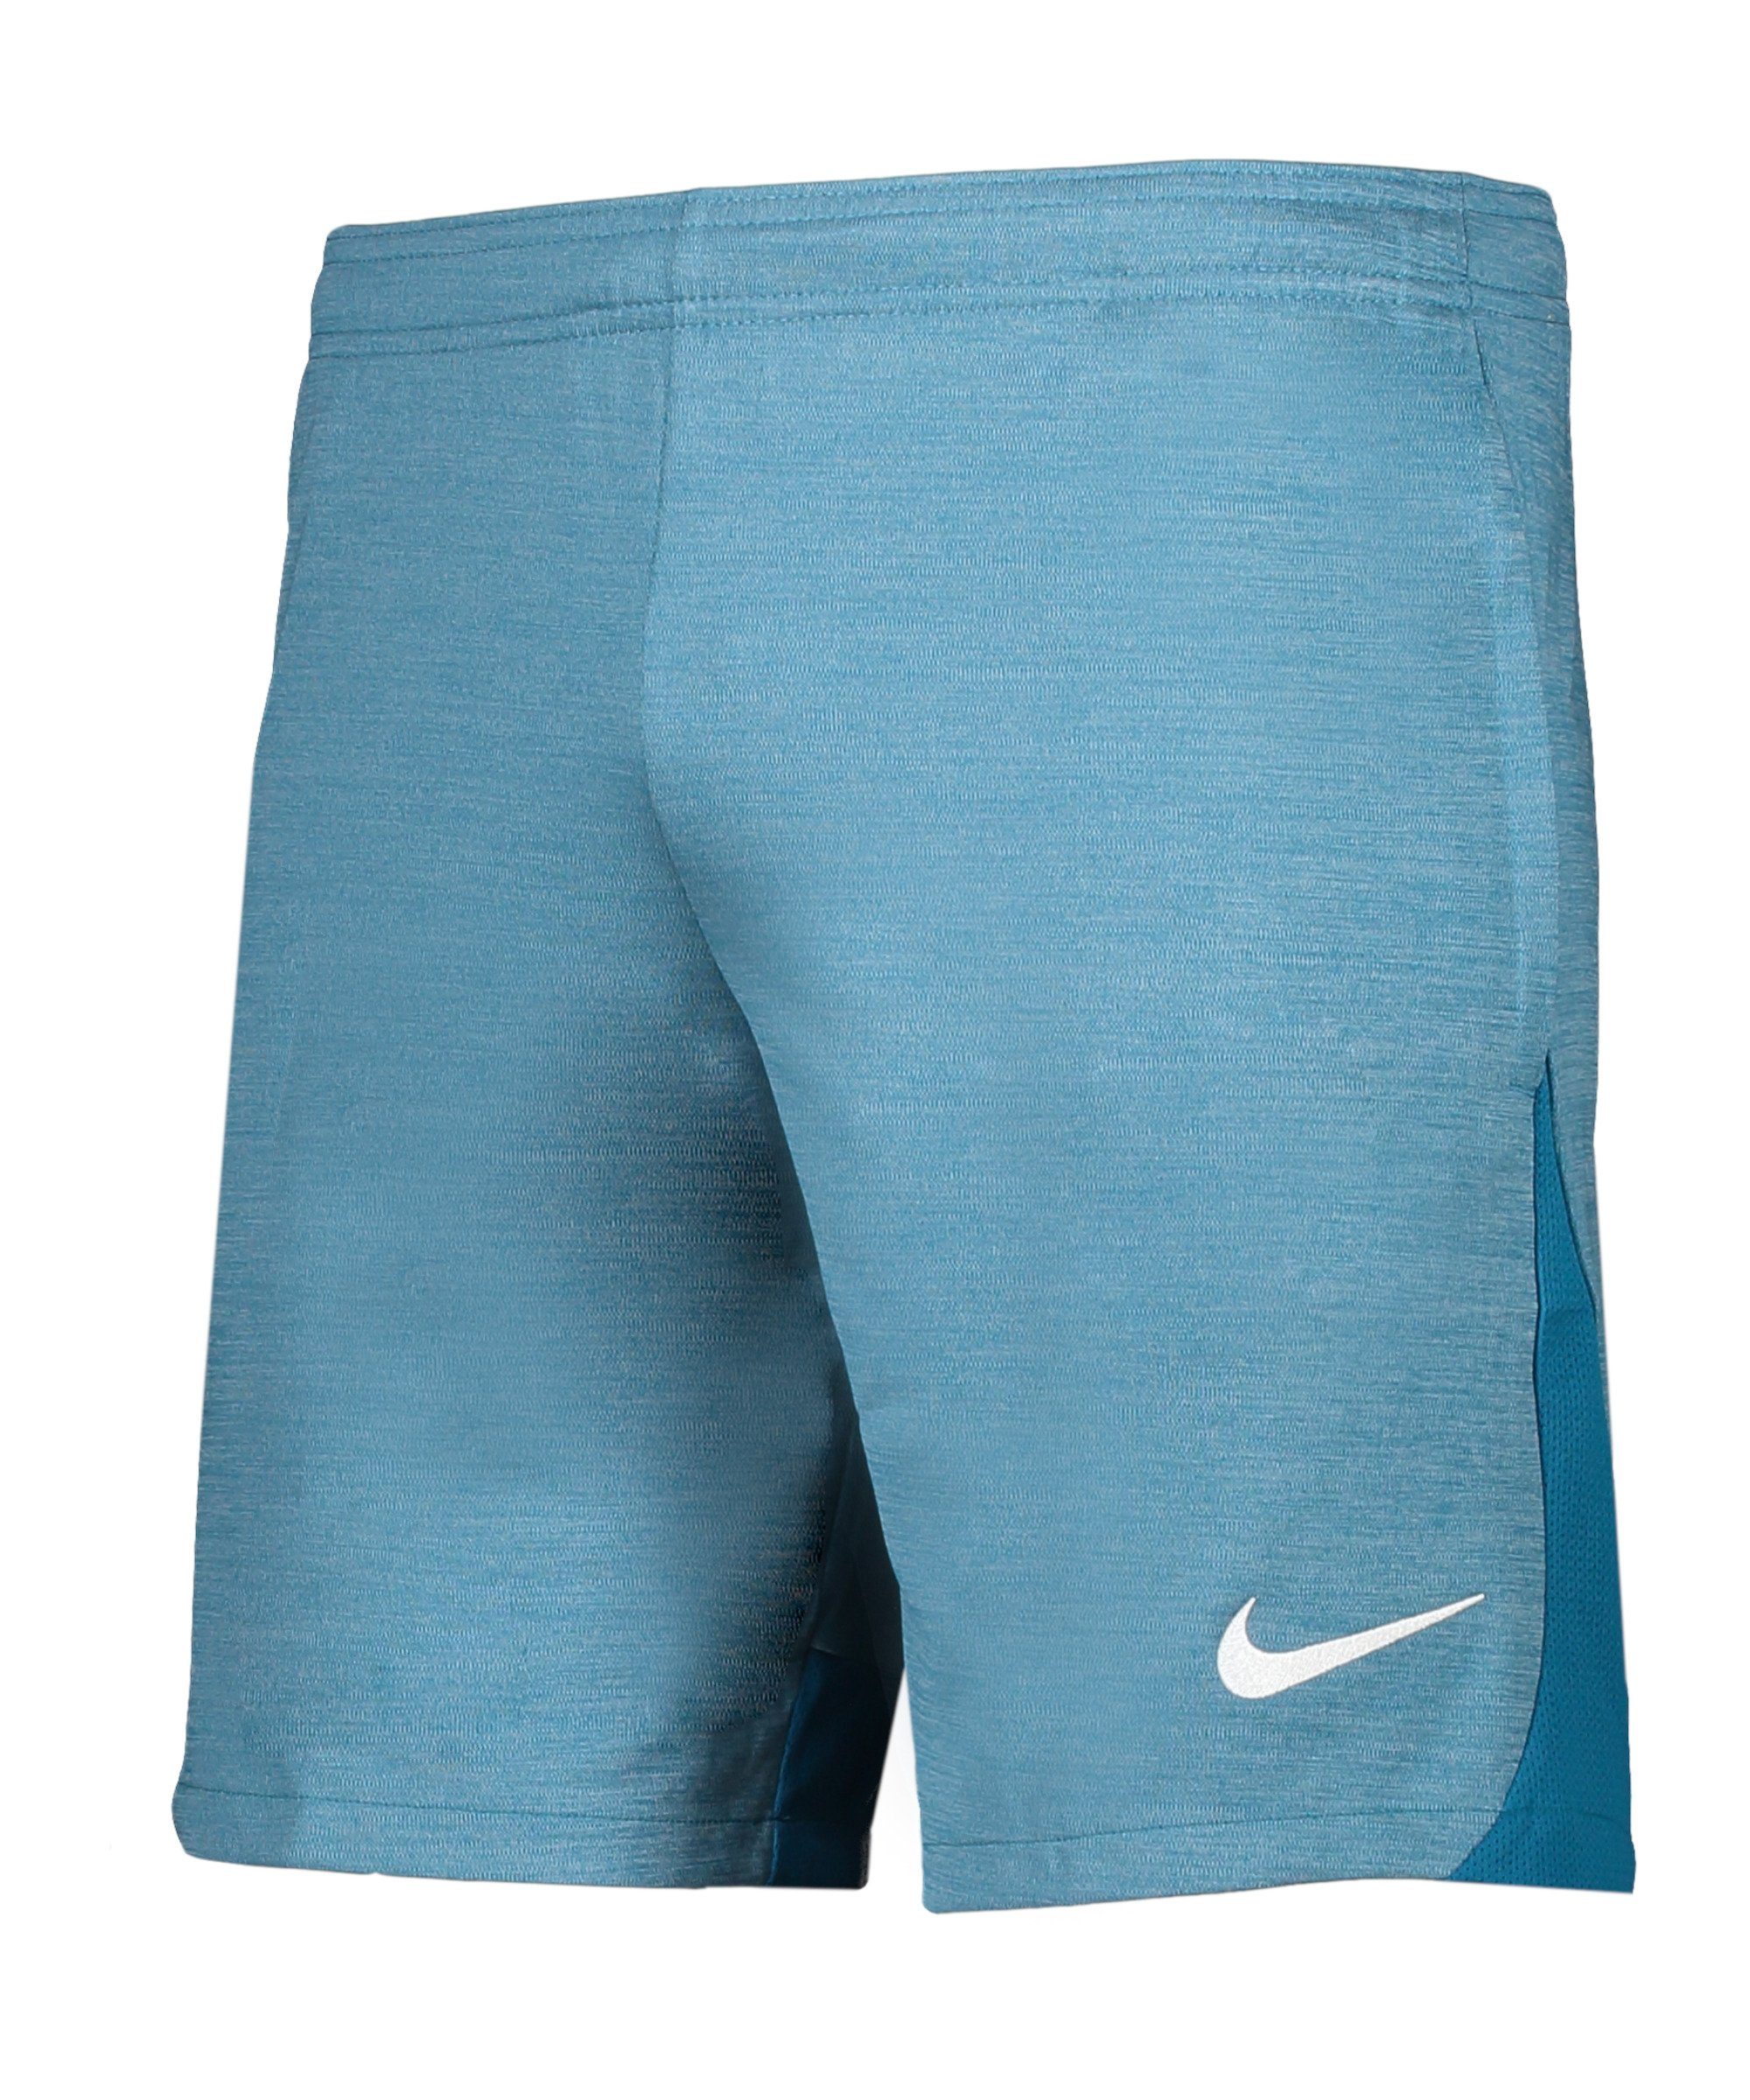 Nike Sporthose Heathered Short blaublaublauweiss